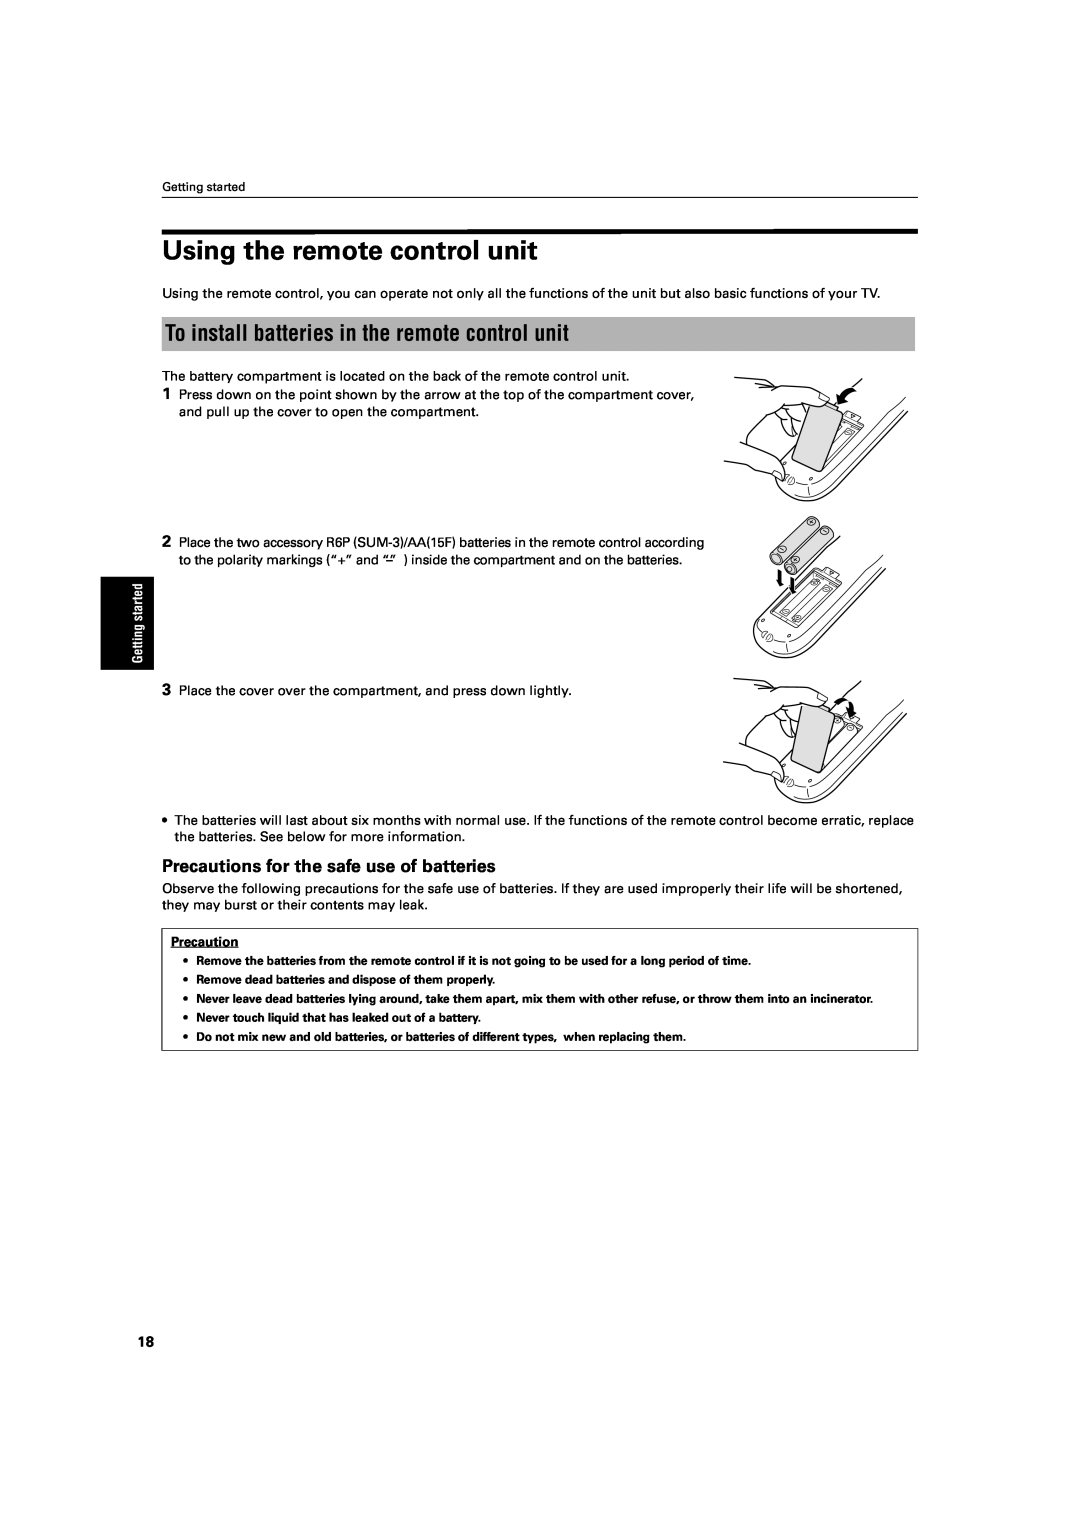 JVC XV-S60 manual Using the remote control unit, To install batteries in the remote control unit 